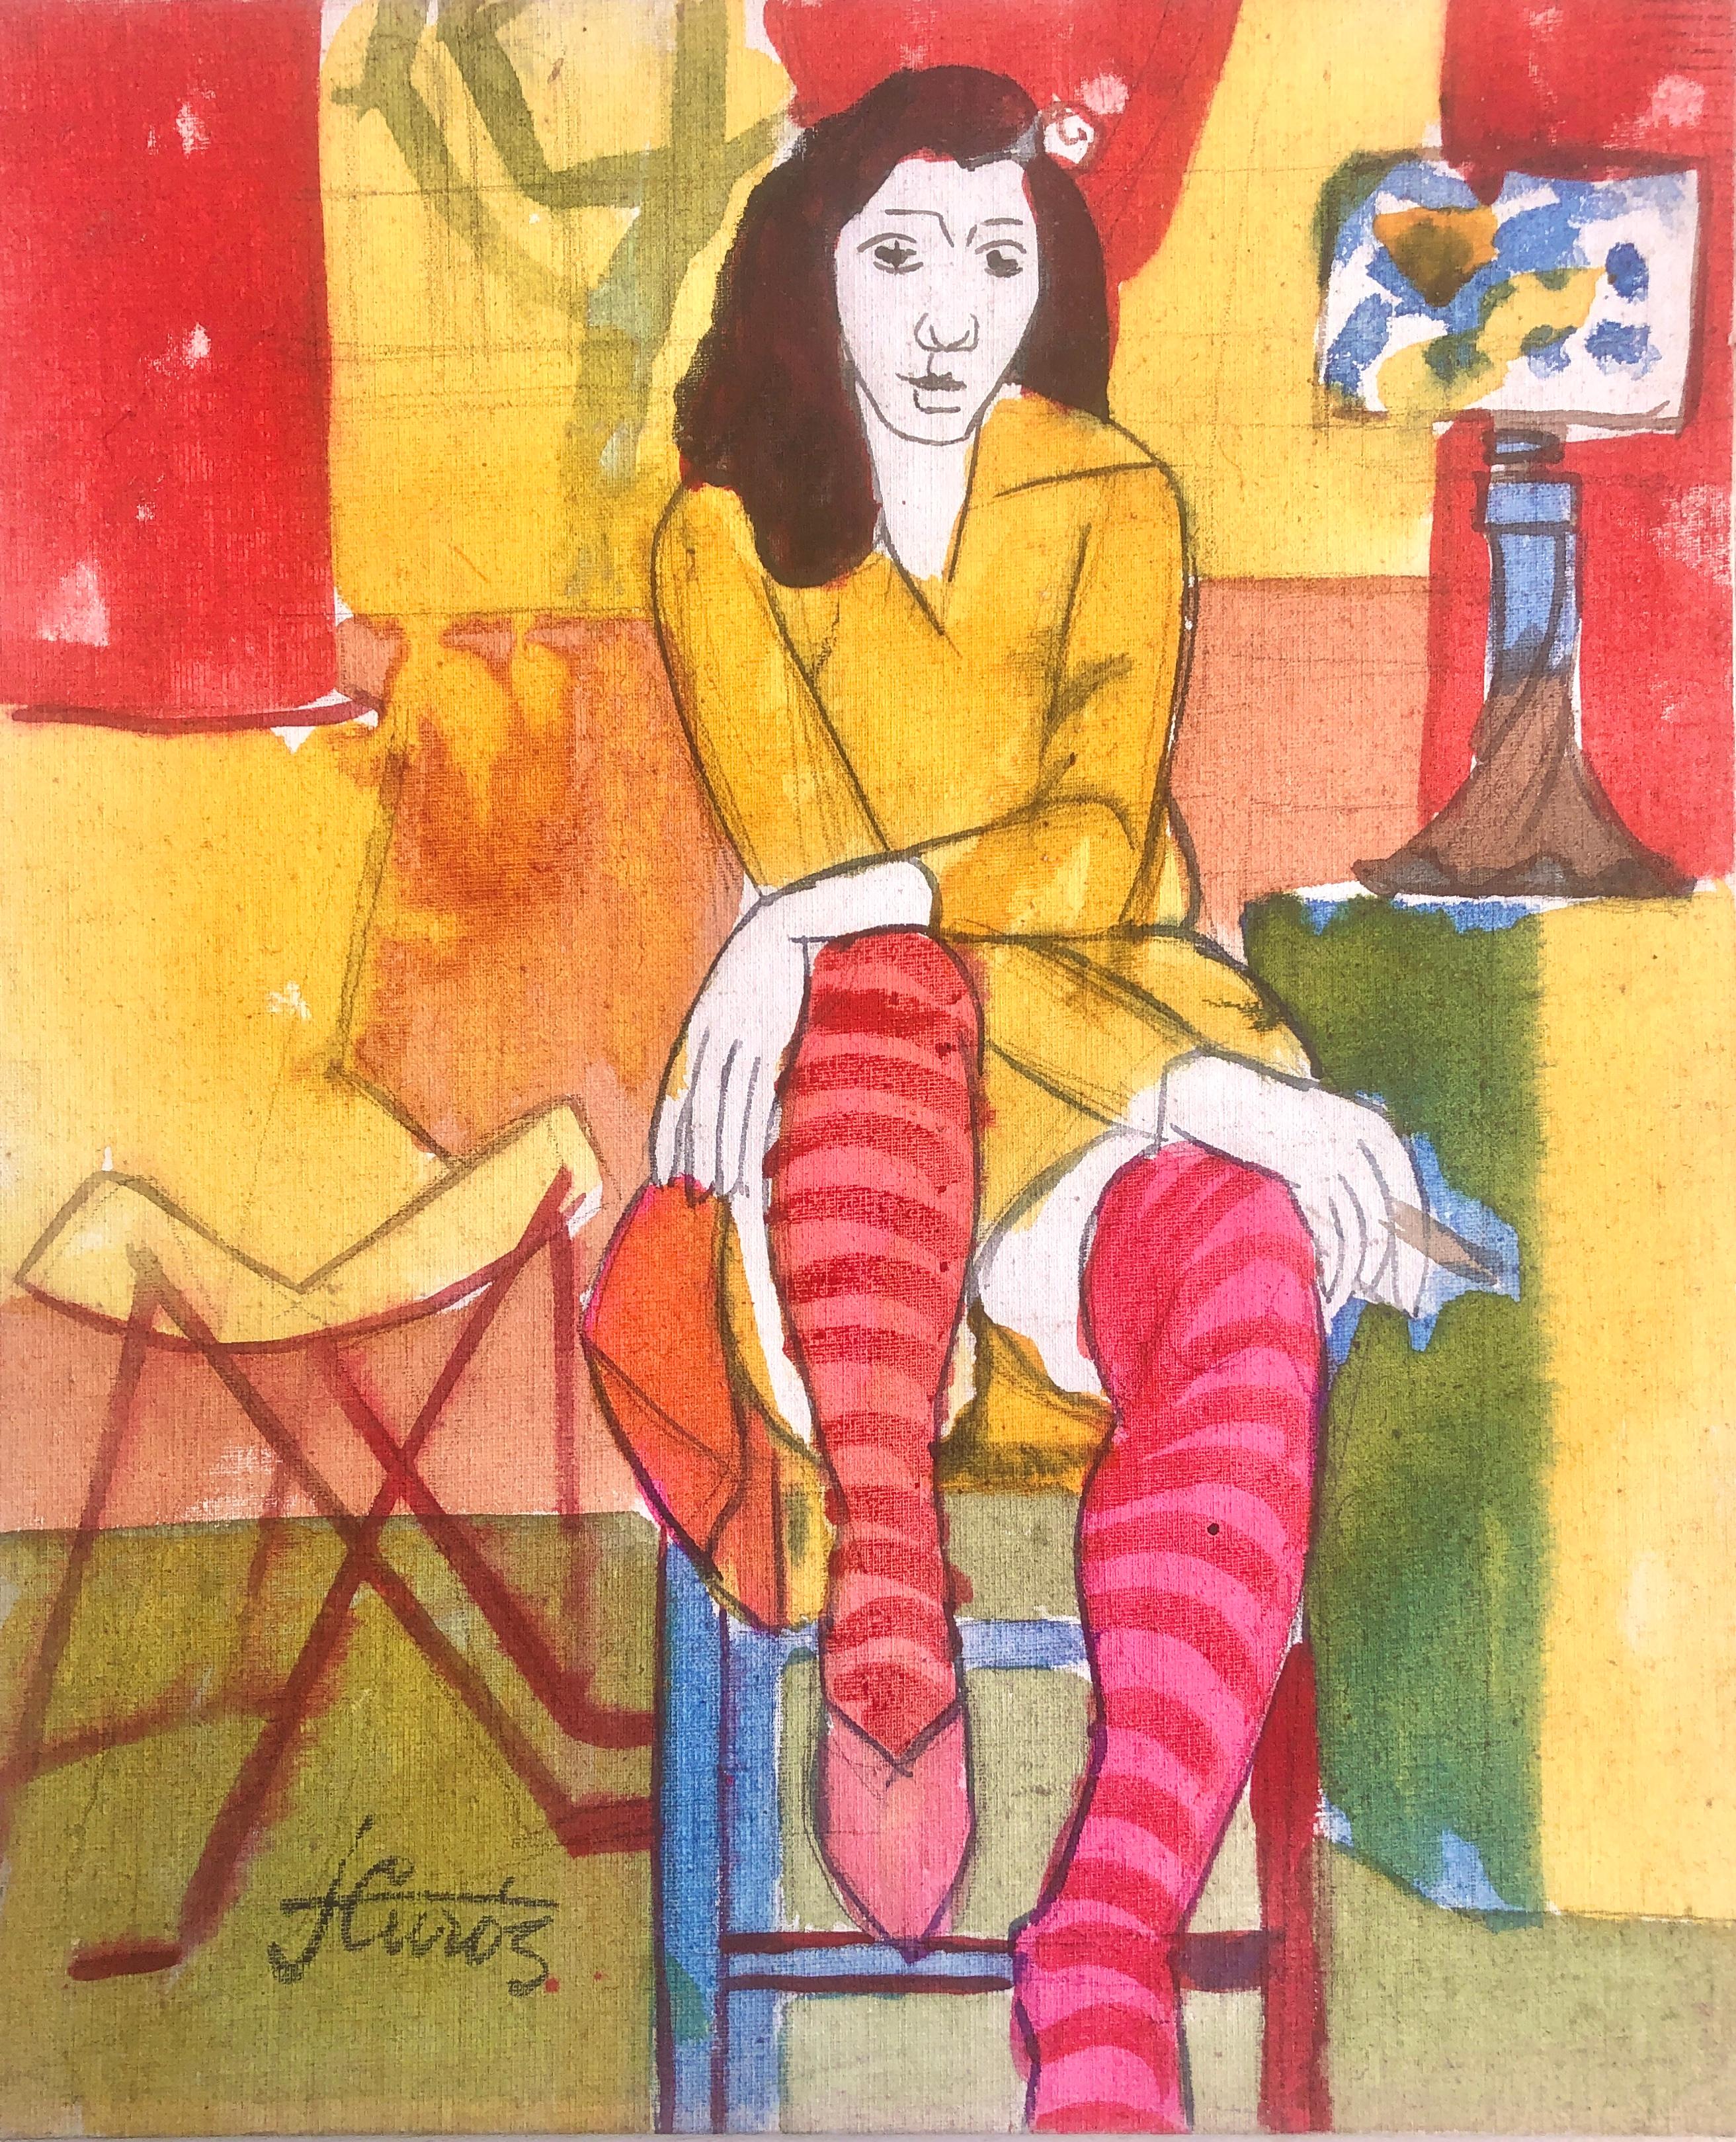 Jordi Curos Portrait Painting - woman smoking mixed media painting